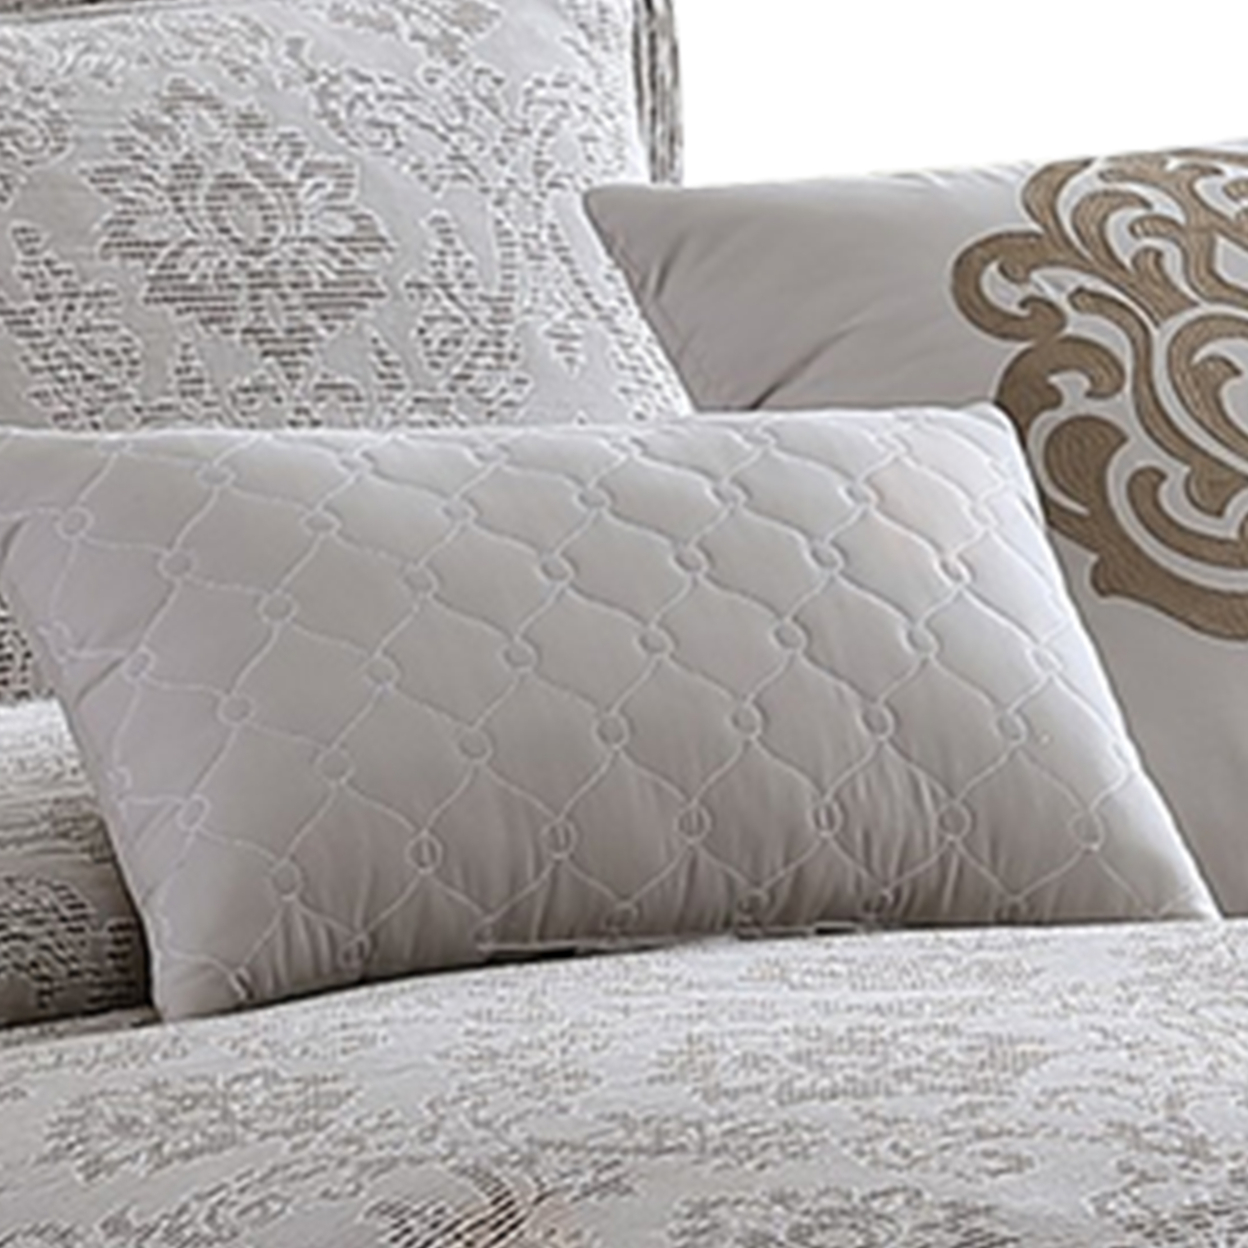 10 Piece King Cotton Comforter Set With Textured Floral Print, Gray- Saltoro Sherpi